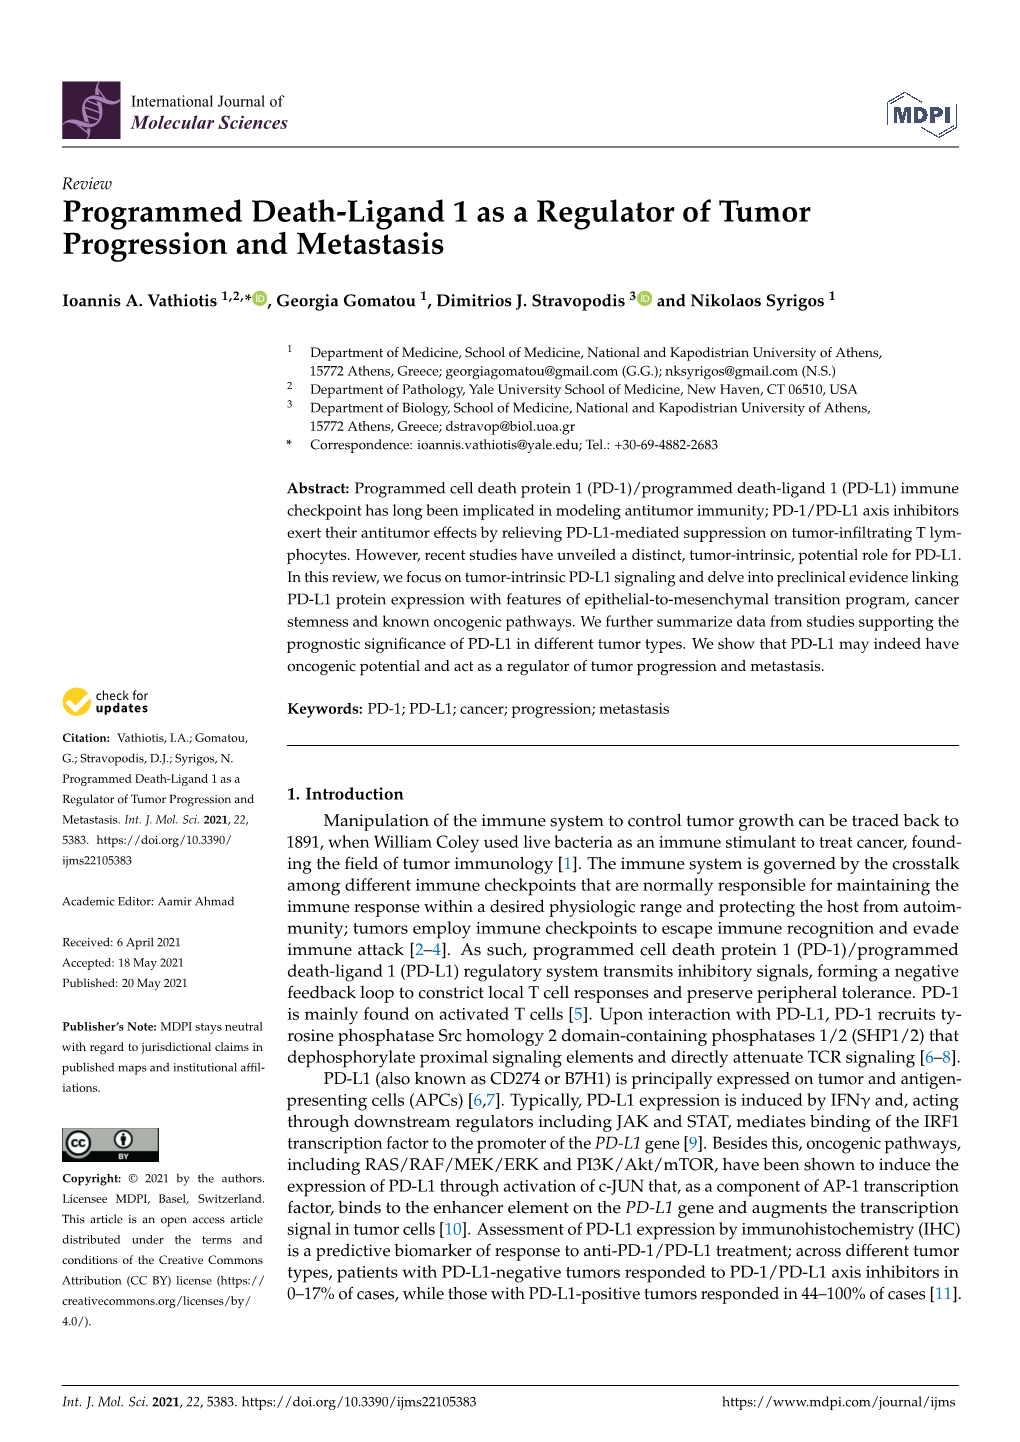 Programmed Death-Ligand 1 As a Regulator of Tumor Progression and Metastasis